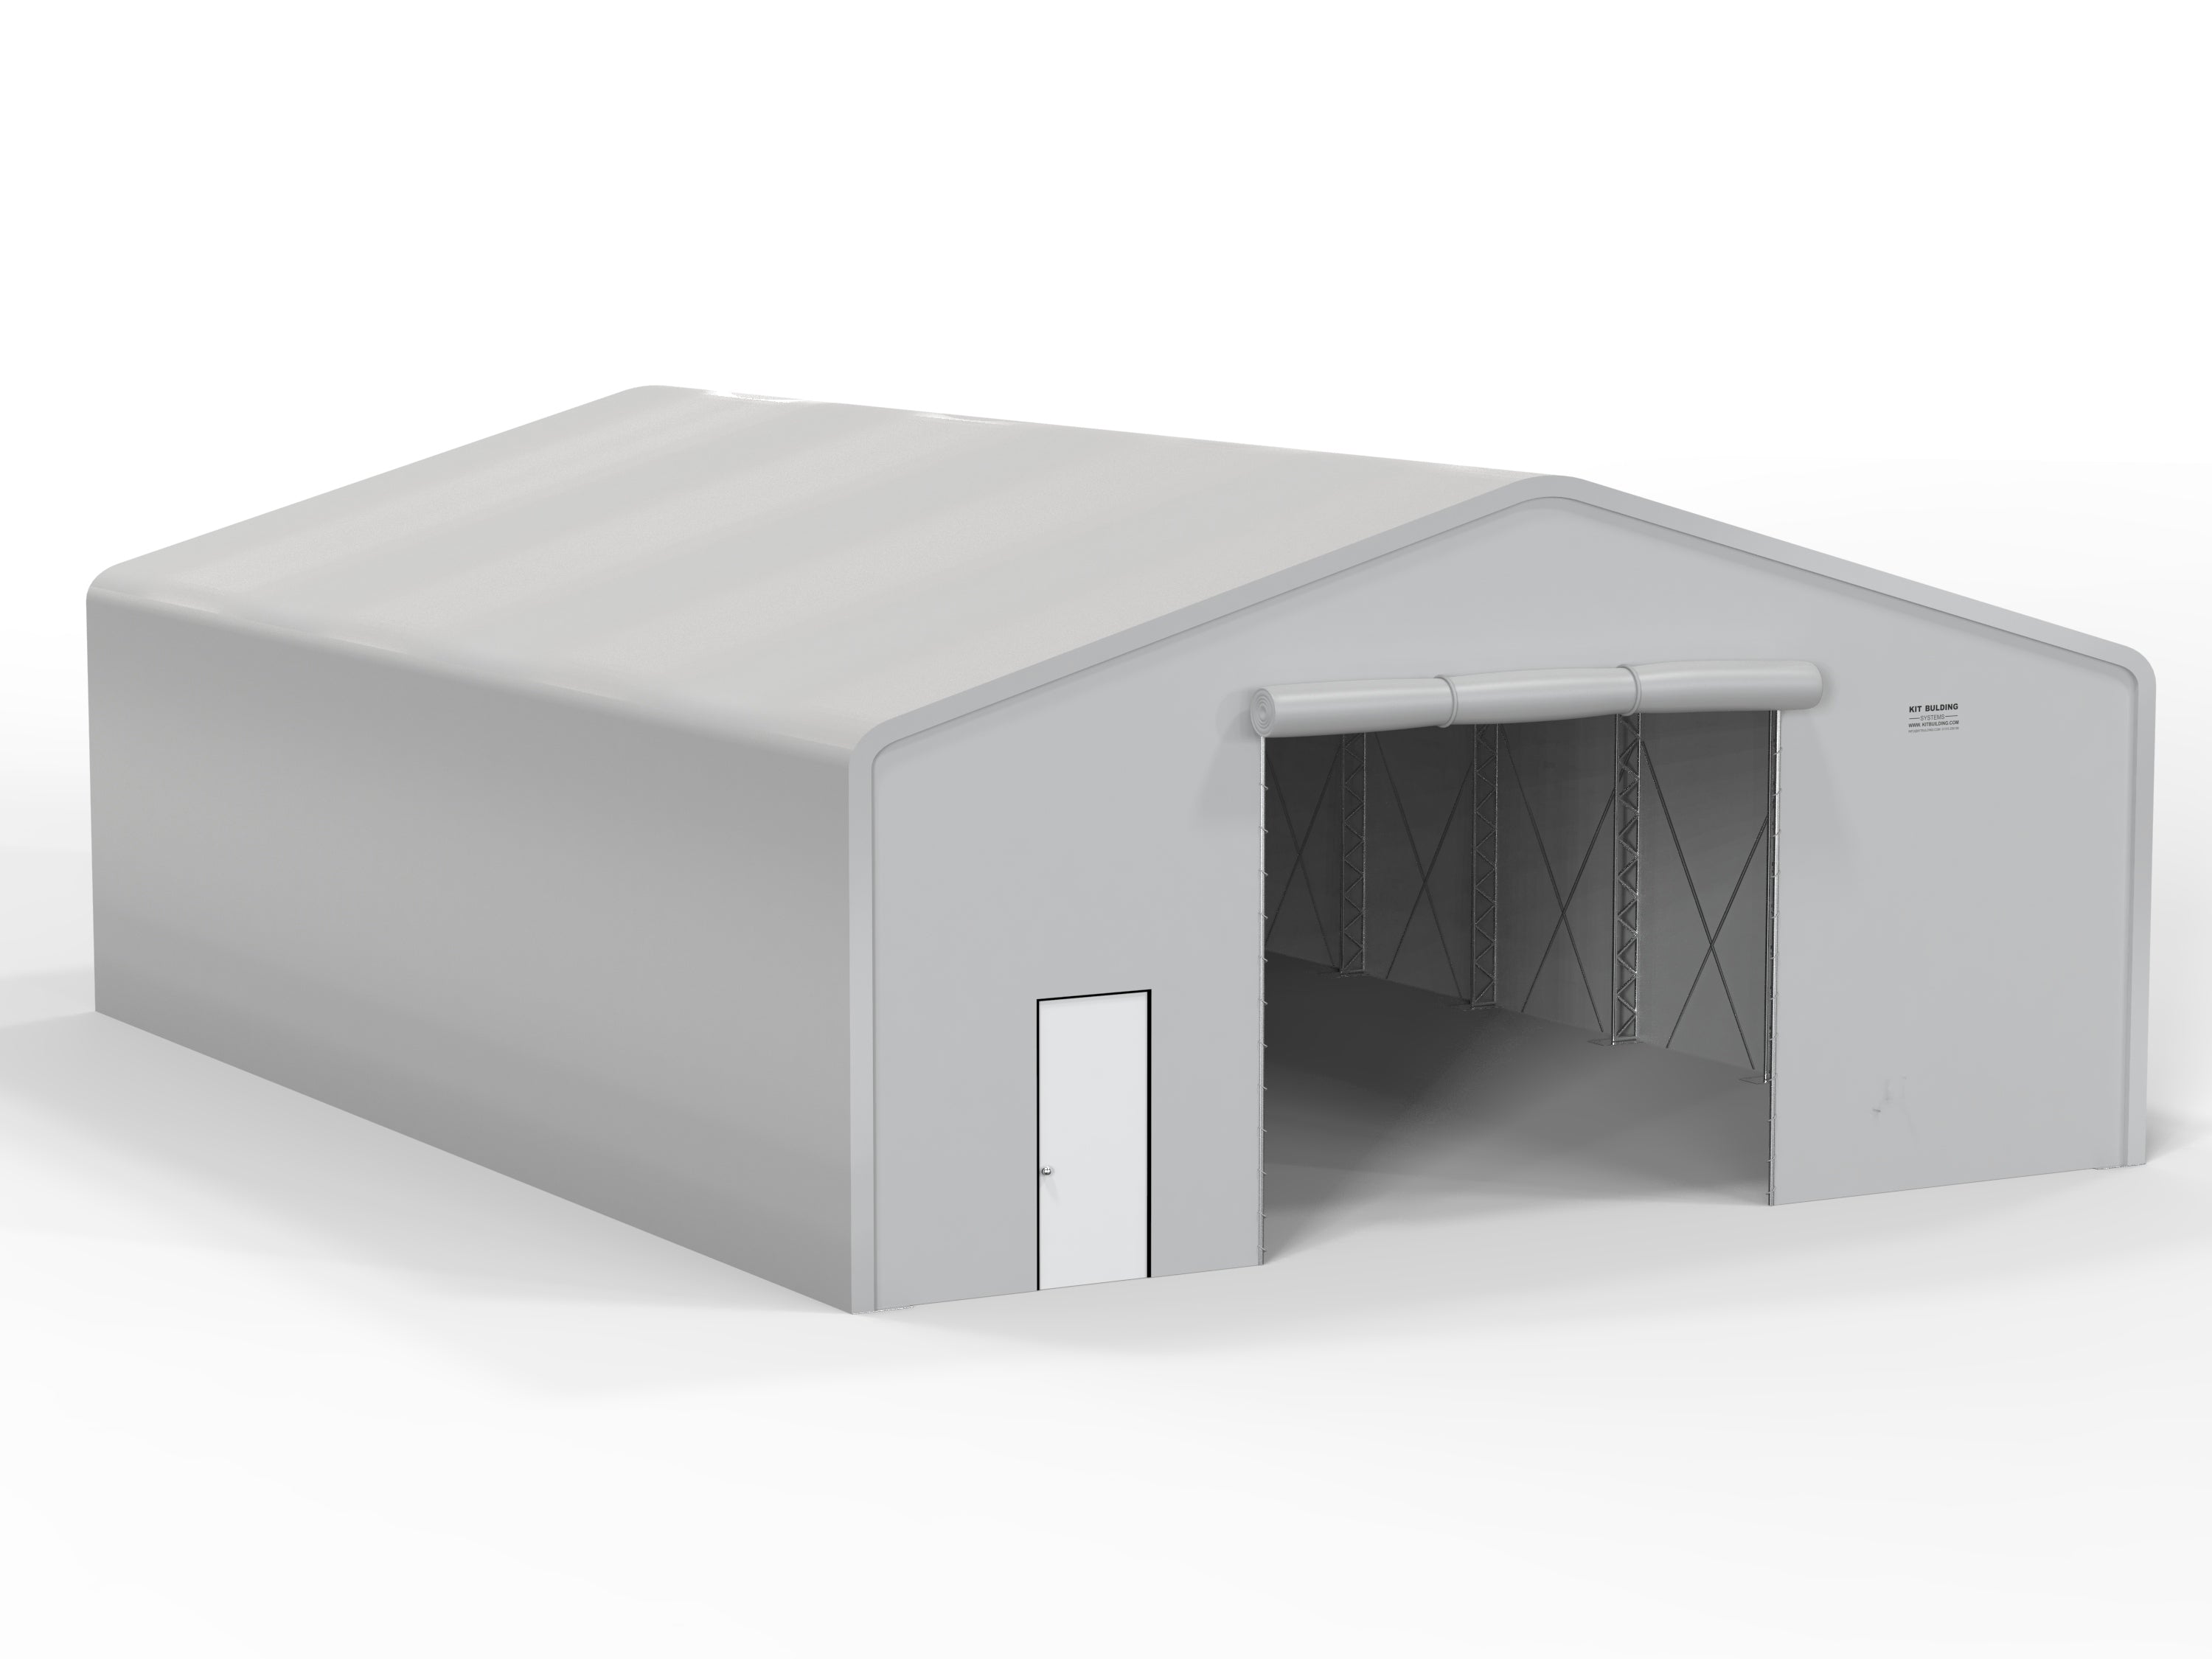 Double Truss PVC temporary storage building - Grey - Manual PVC Roll up Door